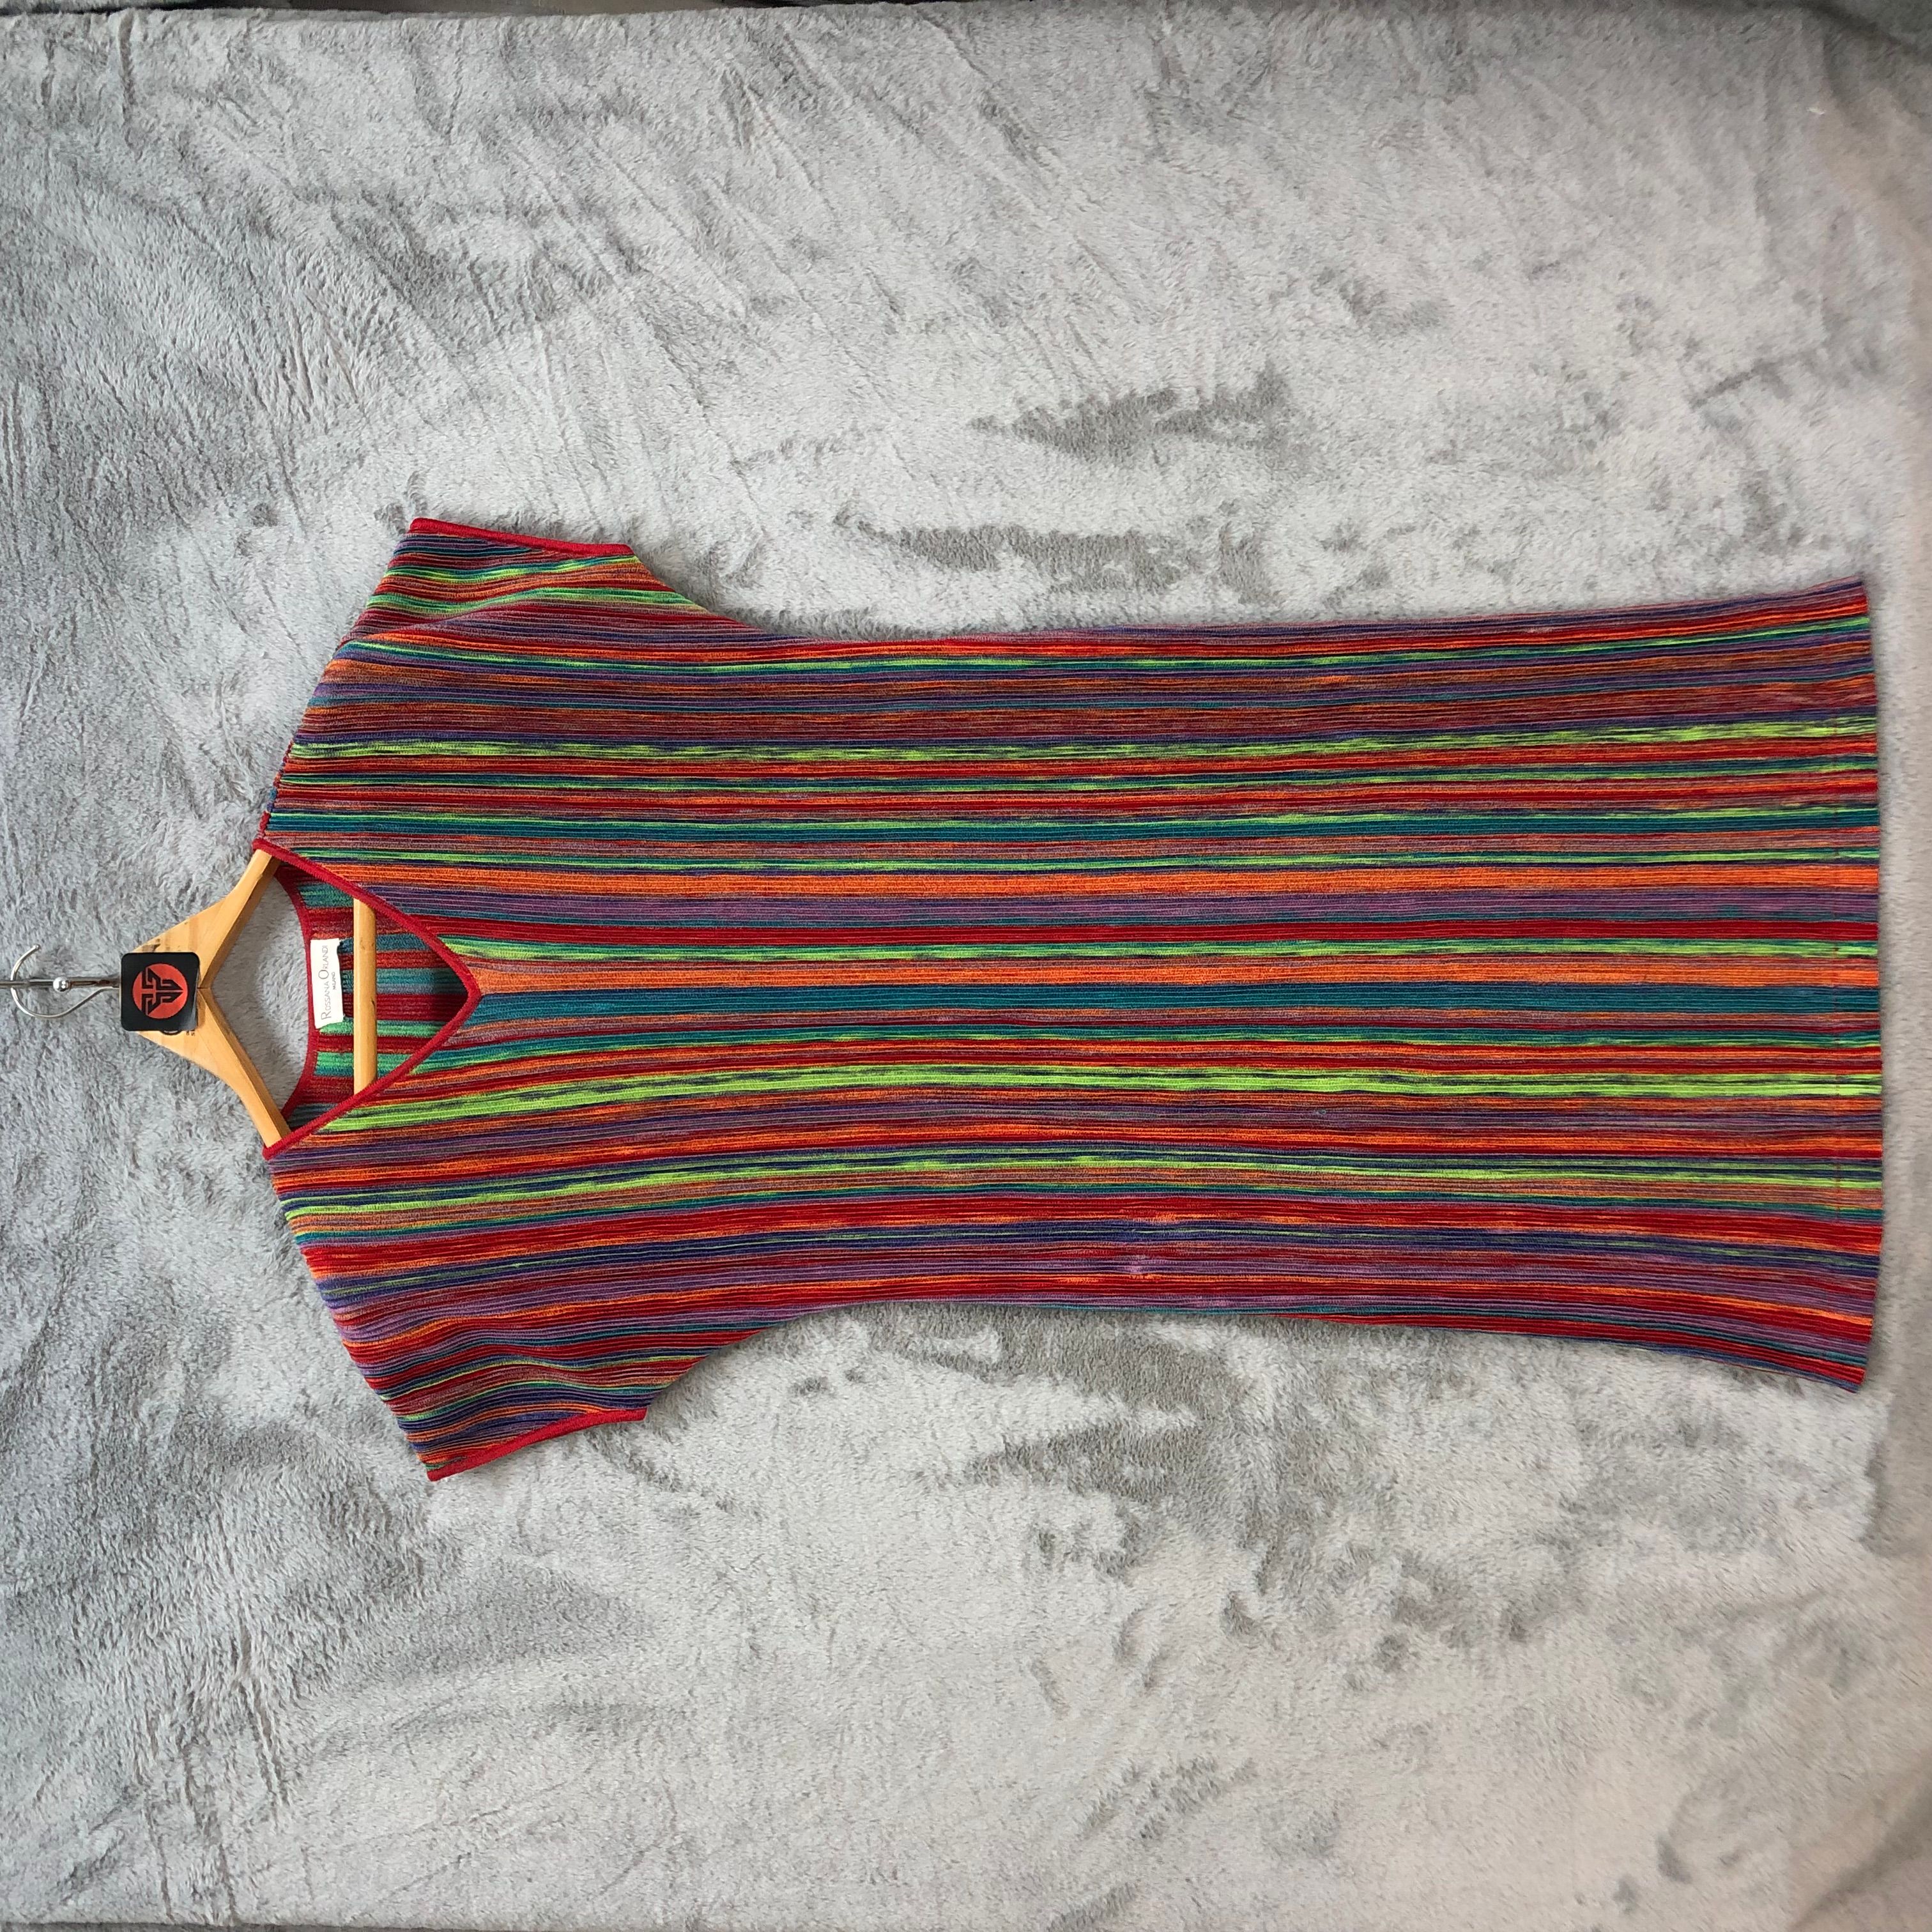 Designer - Vintage Rossana Orlandi Multicolor Pleated Dress #6437-67 - 1